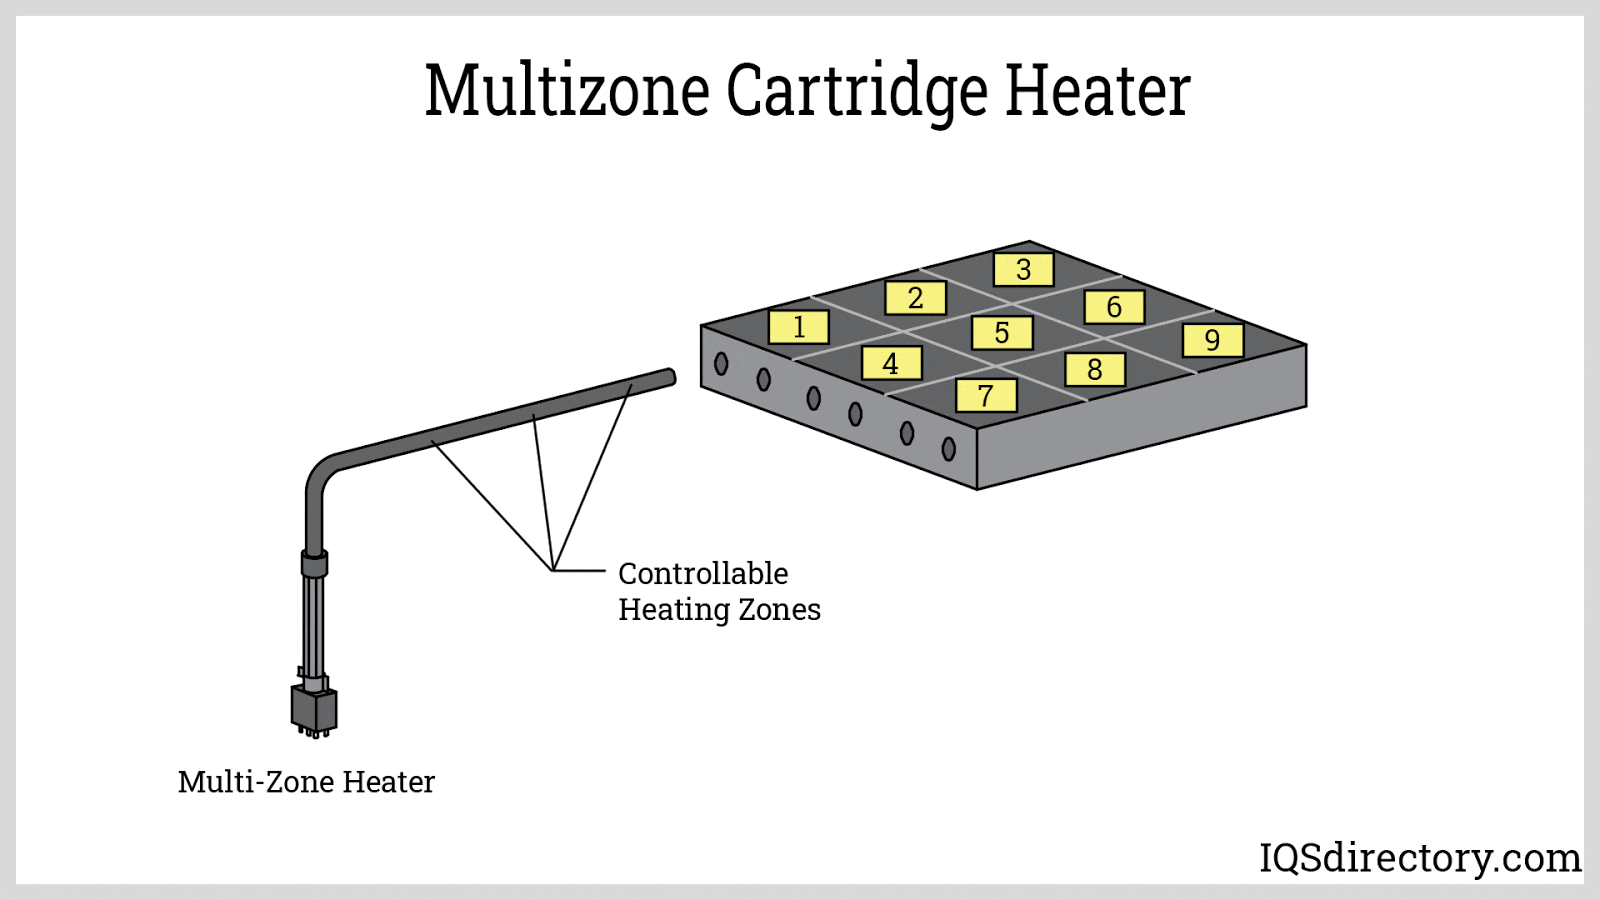 Multizone Cartridge Heater